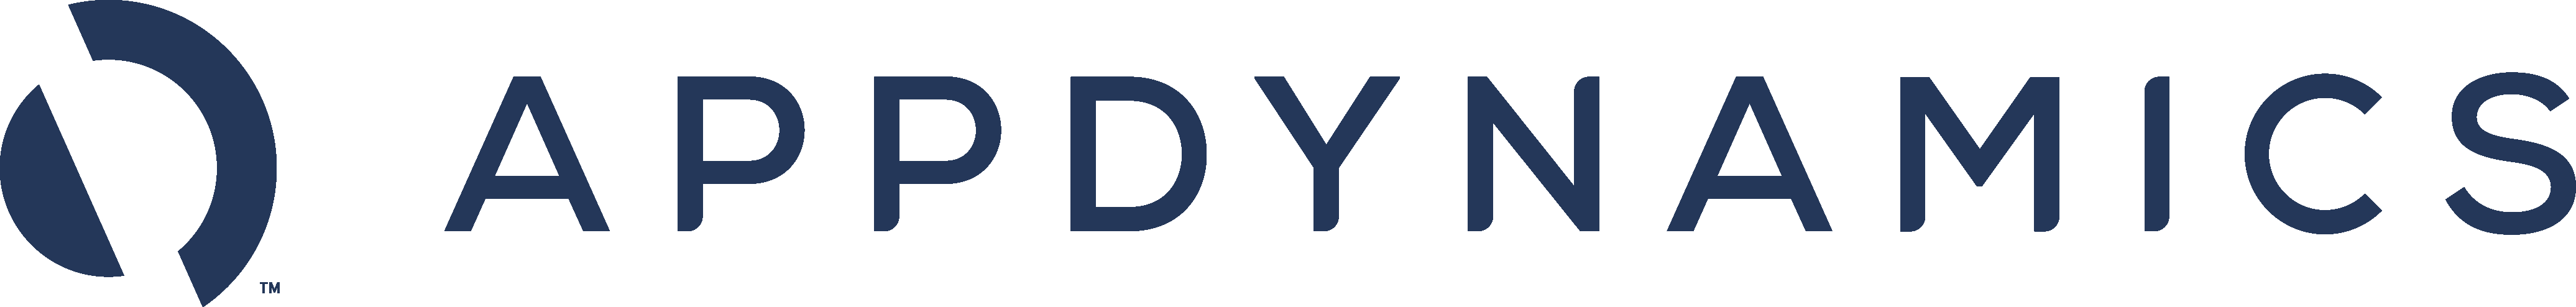 appdynamics logo